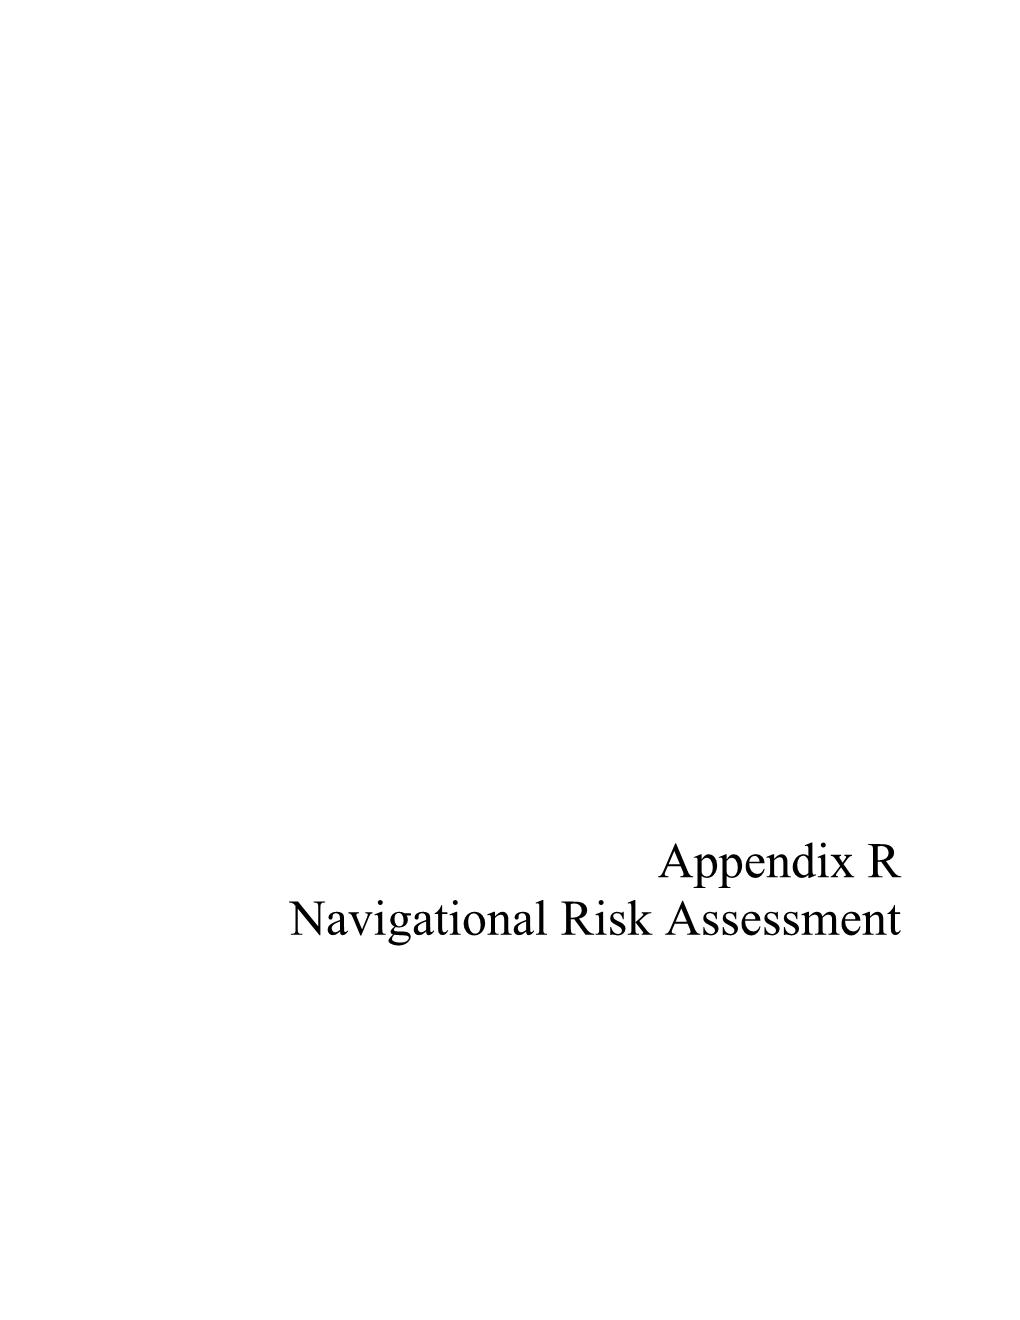 Appendix R Navigational Risk Assessment